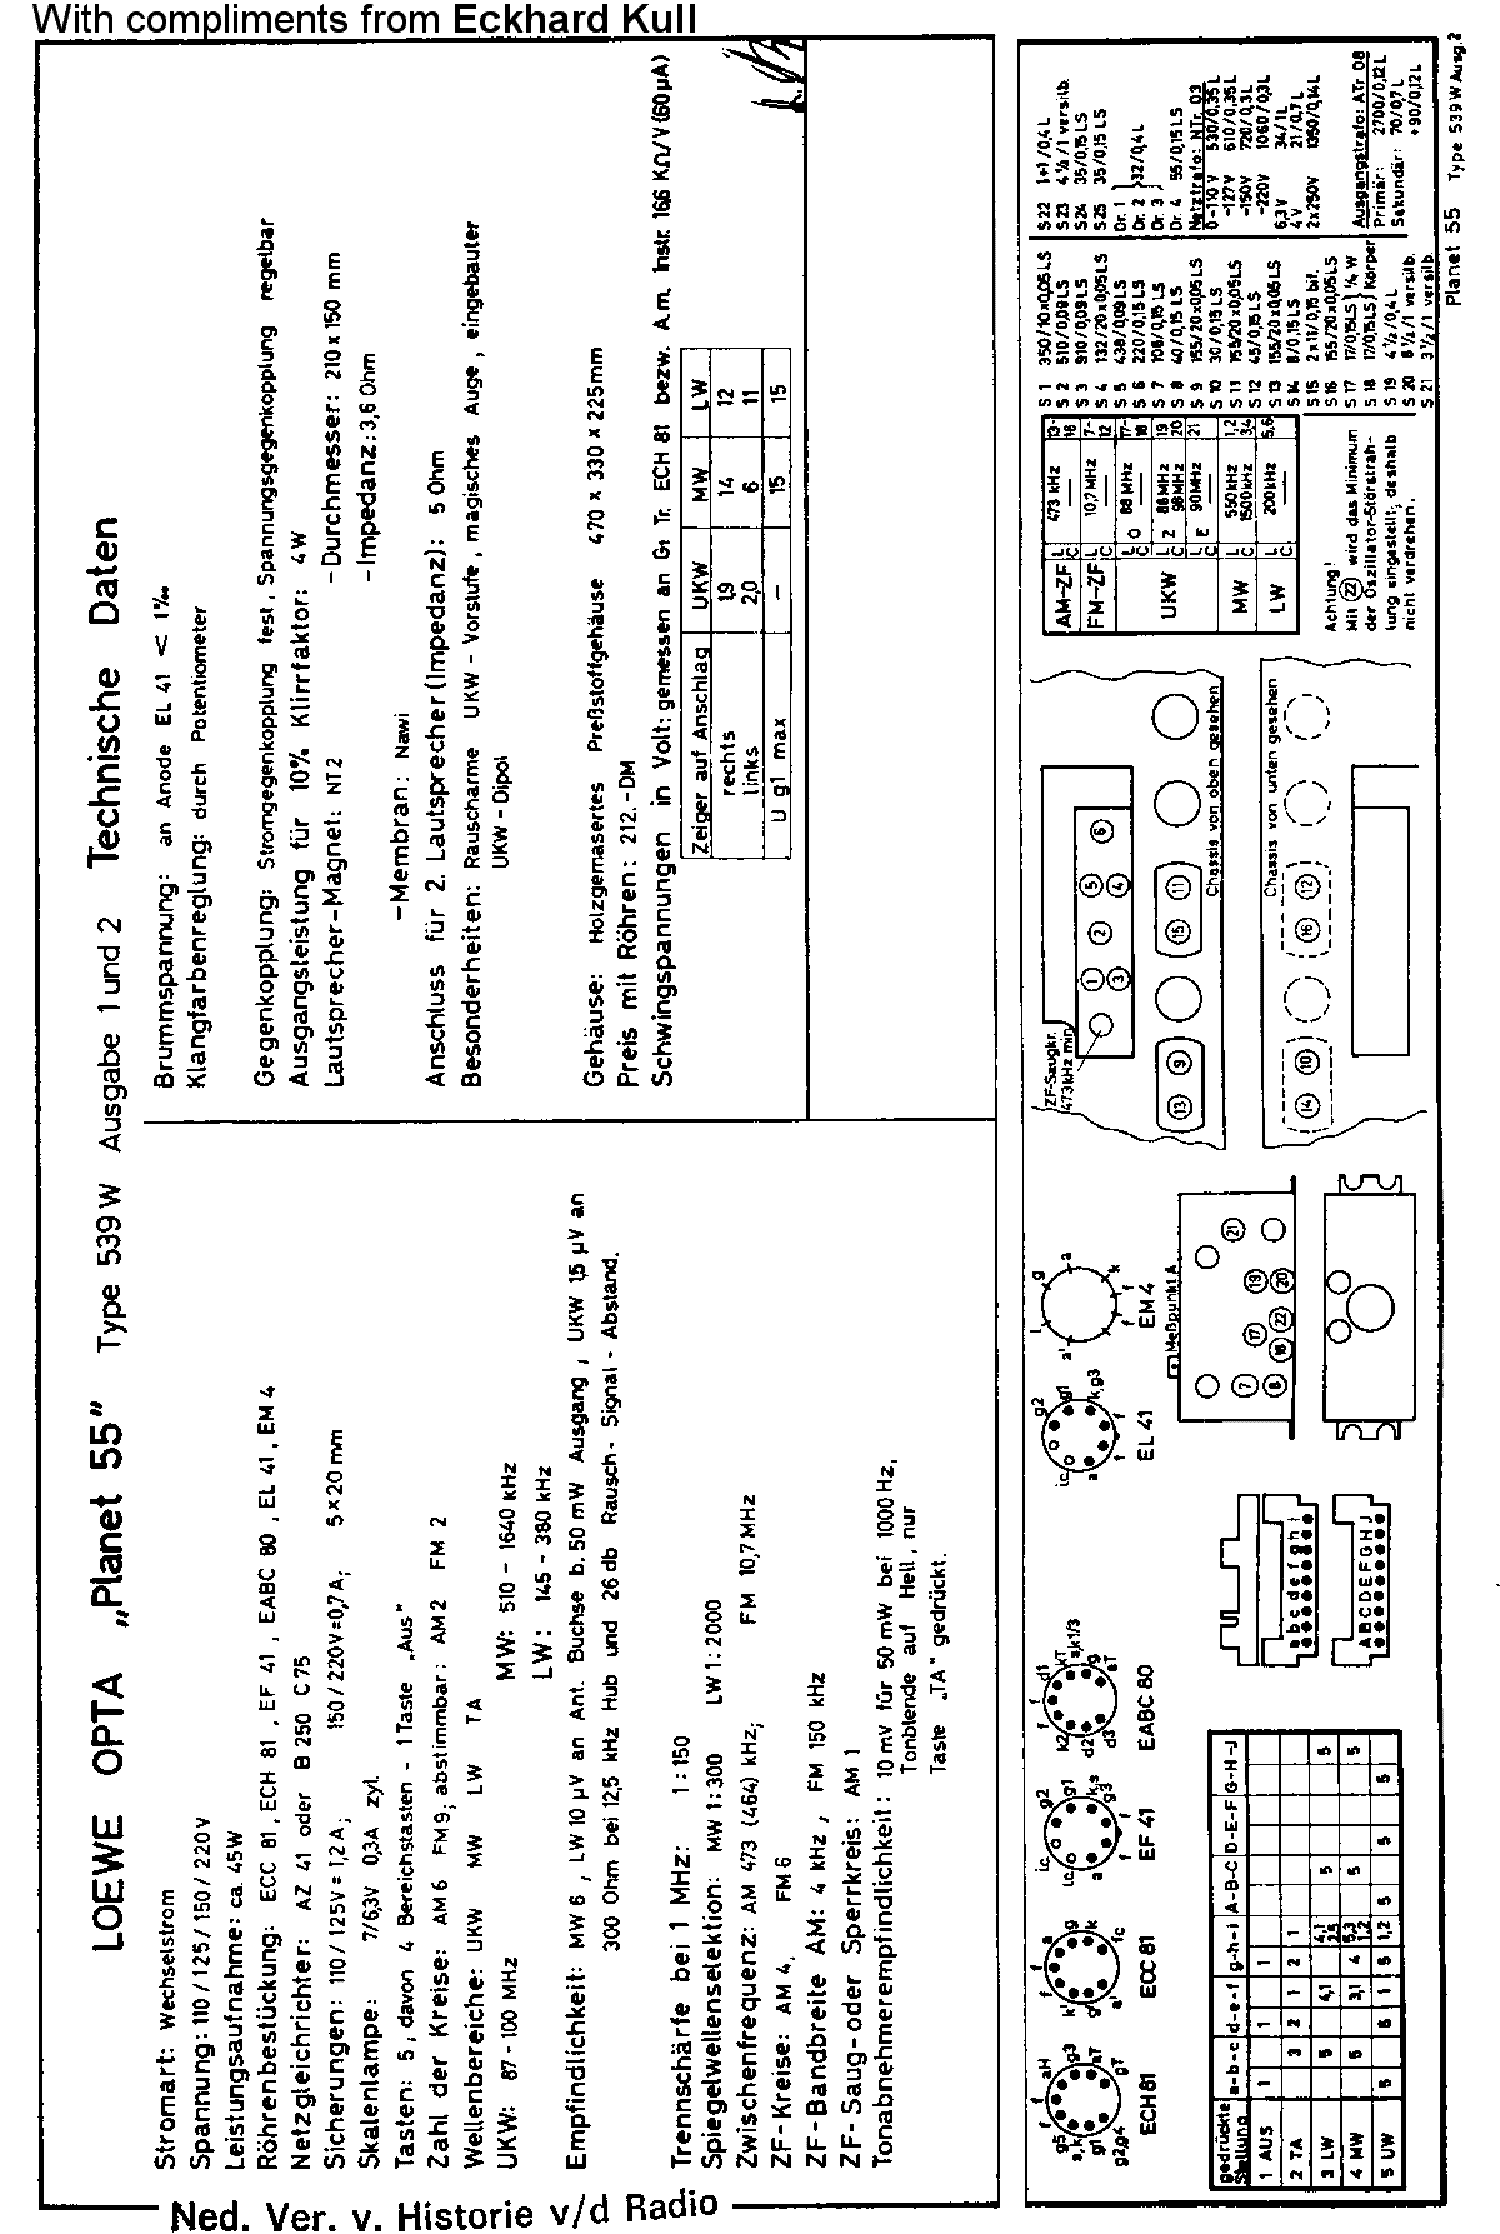 LOEWEOPTA 539W PLANET-55 AM-FM RECEIVER 1953 SM service manual (1st page)